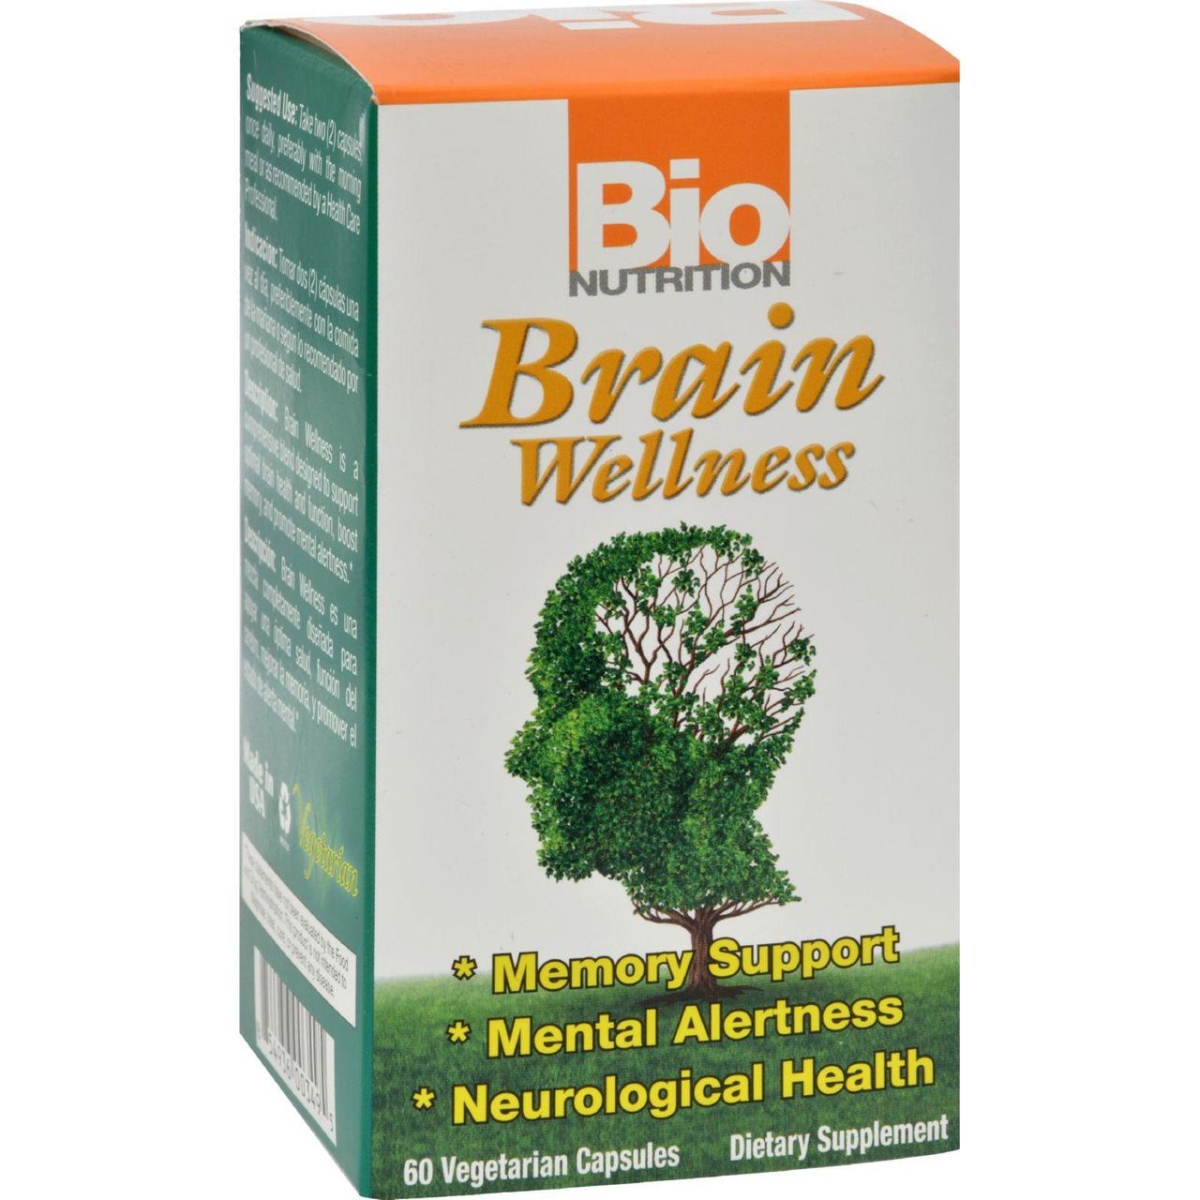 Bio Nutrition Hg1500958 Brain Wellness - 60 Vegetarian Capsules